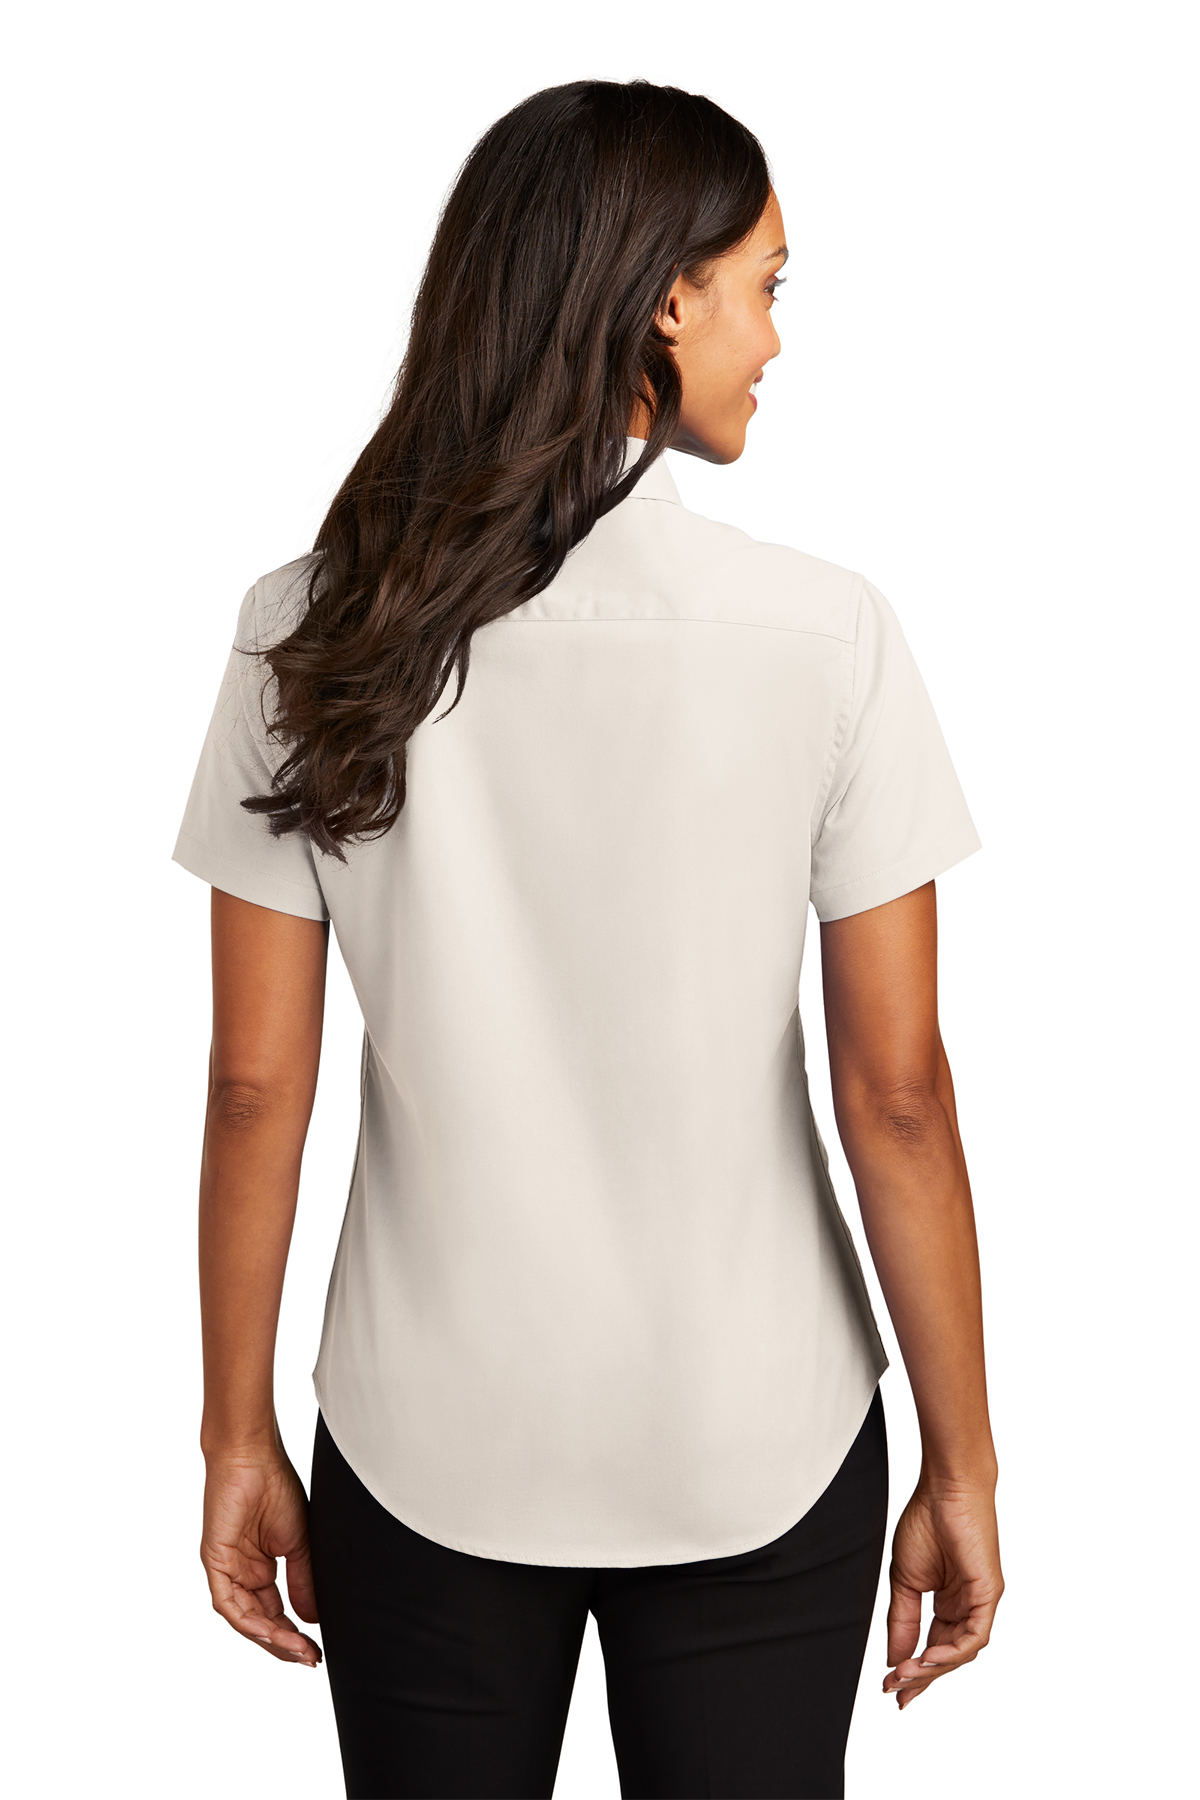 Port Authority Ladies Short Care | Authority Easy Port Shirt Product Sleeve 